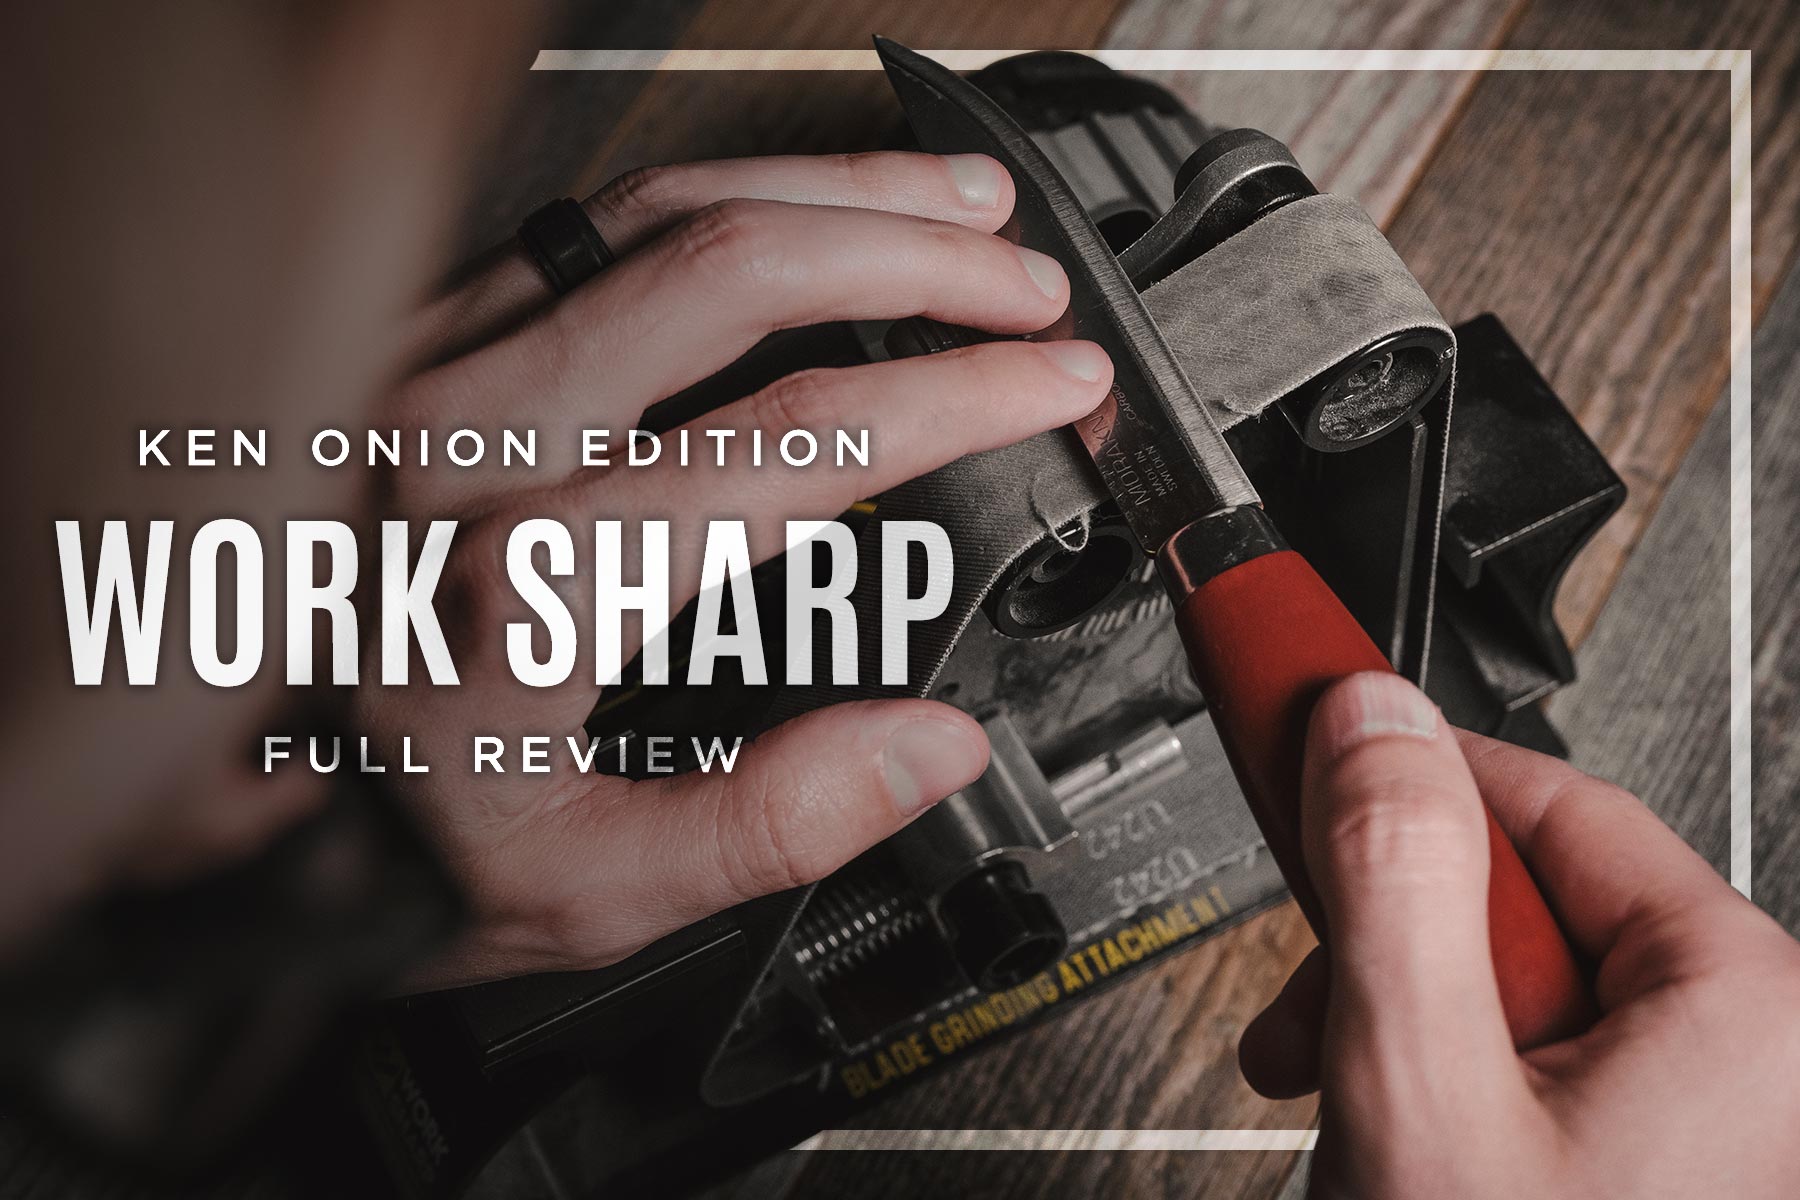 Ken Onion Edition Worksharp Review